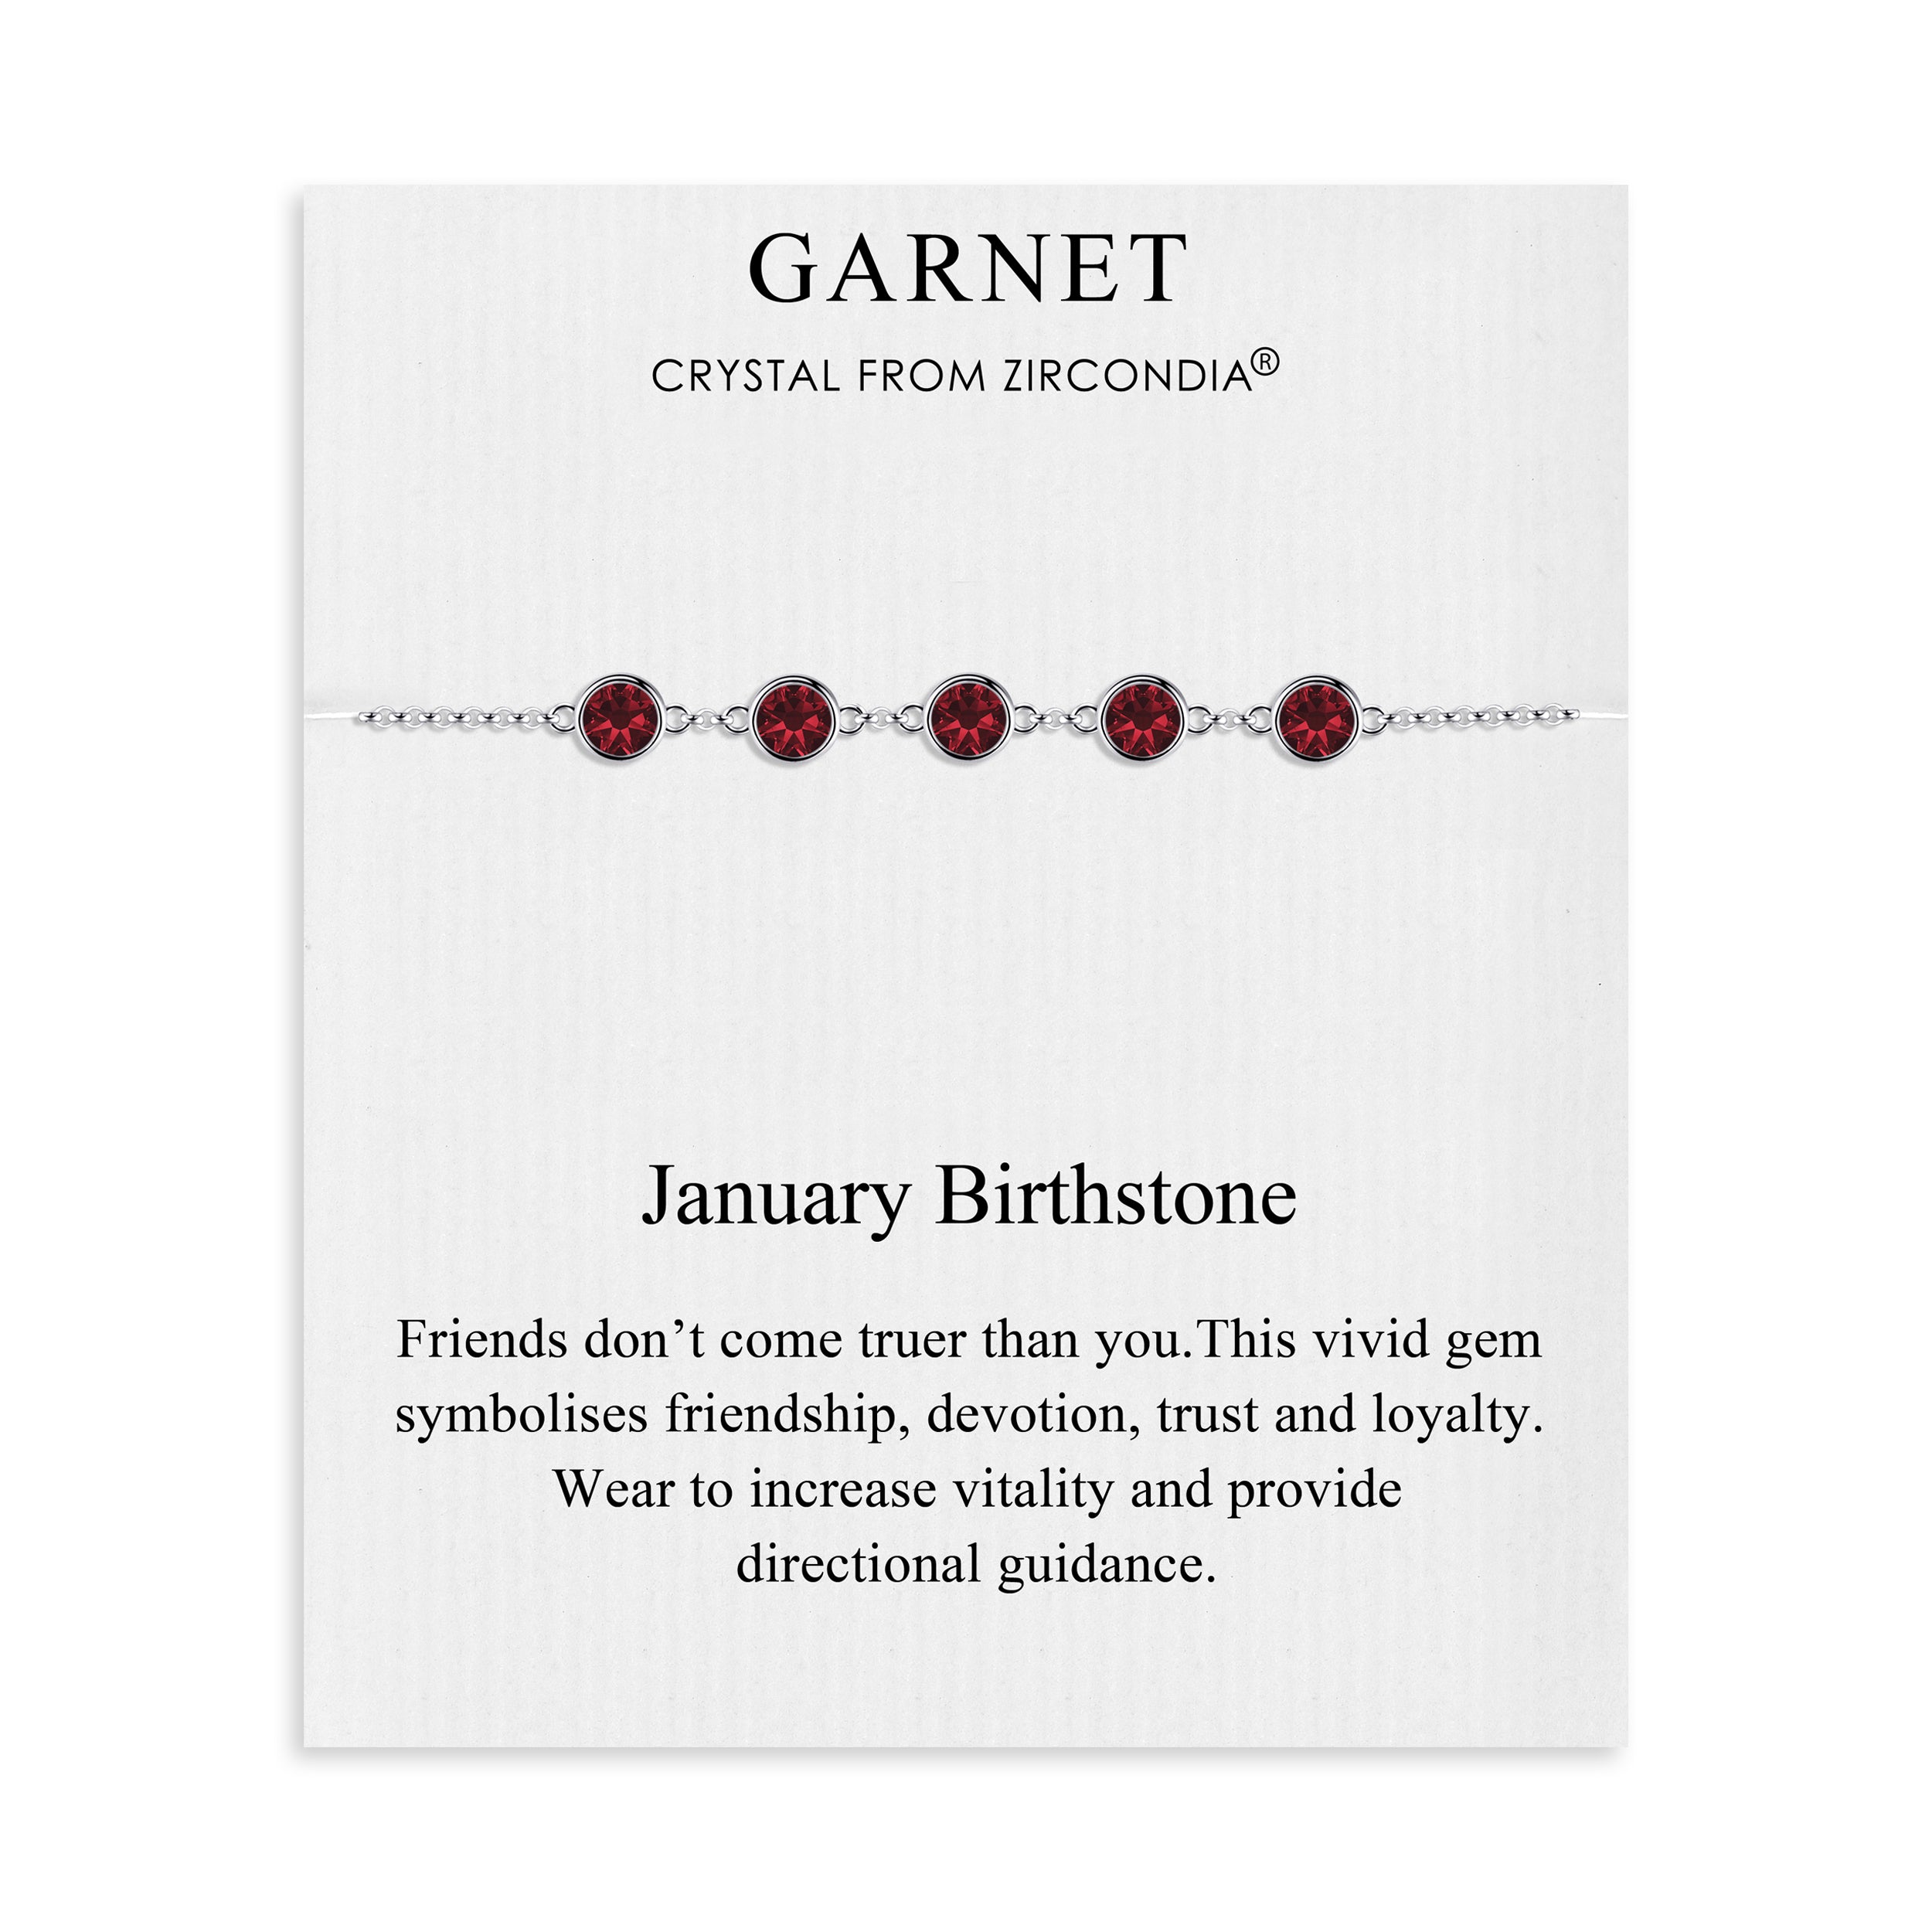 January Birthstone Bracelet Created with Garnet Zircondia® Crystals